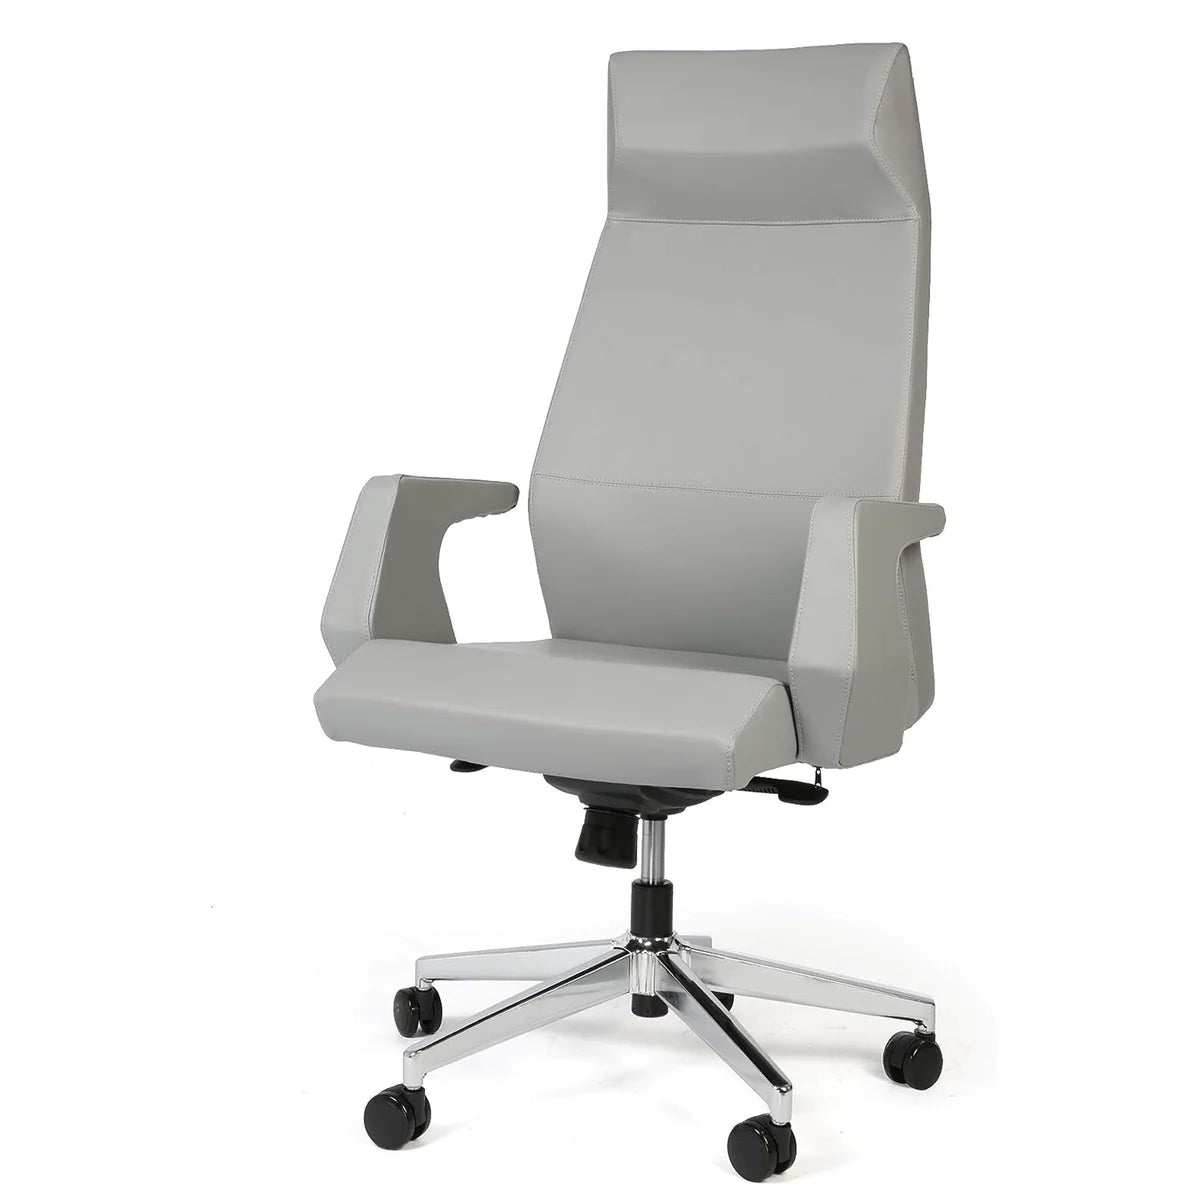 Swivel Chair with Adjustable Headrest Office Chair Ergonomic Desk Chair, High Back,Gray